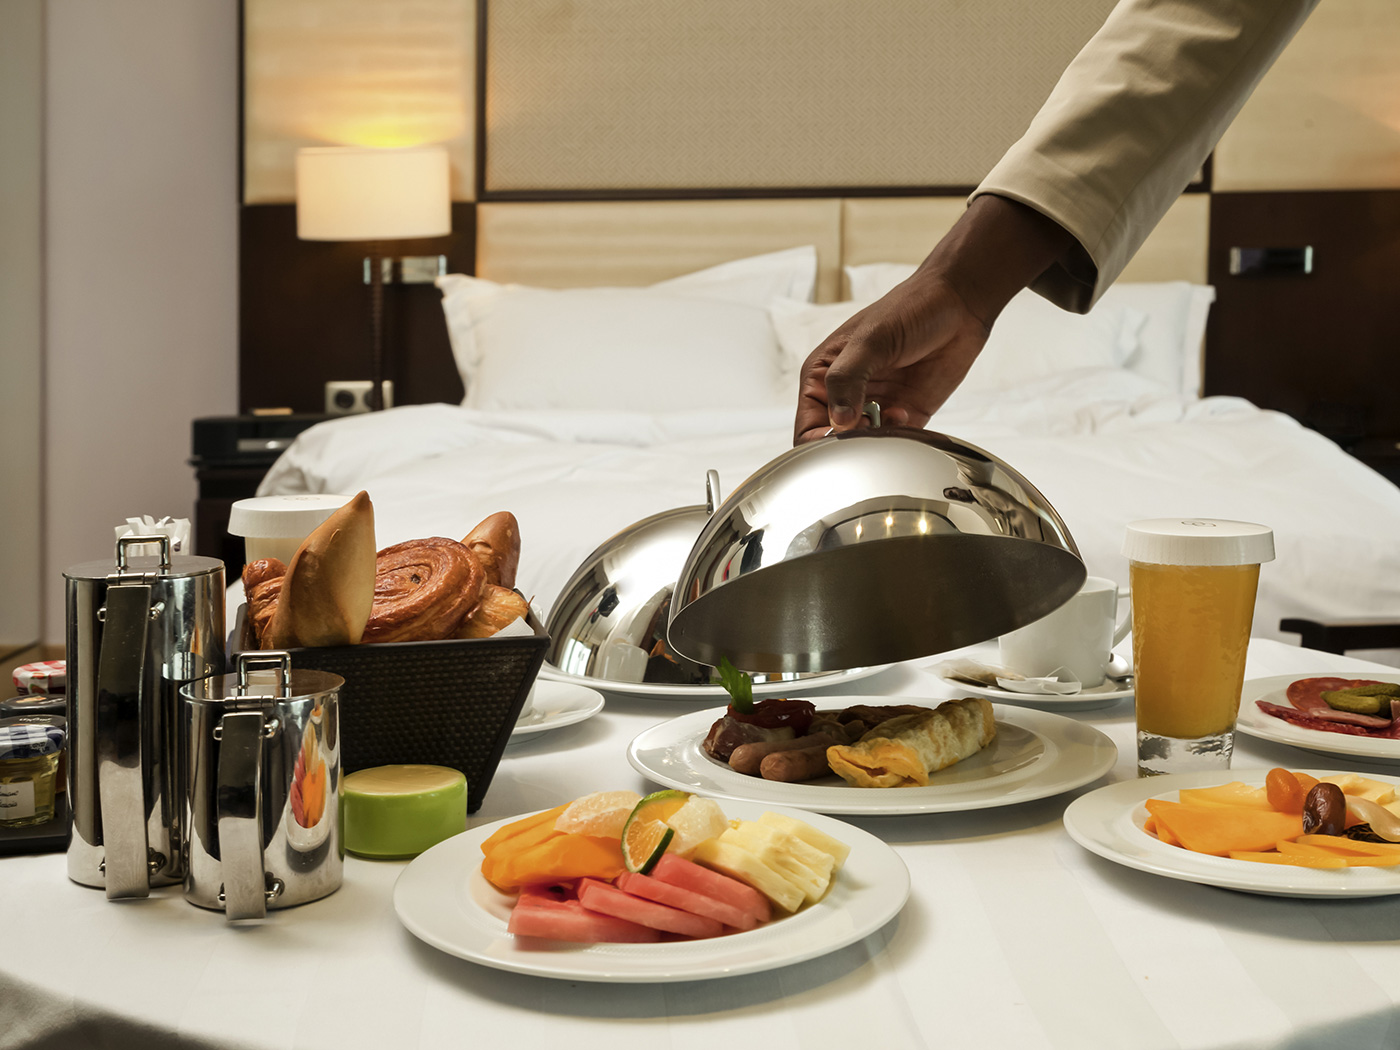 Реализация услуг питания. Завтрак в номер. Рум сервис в гостинице. Завтрак в отеле рум сервис. Завтрак в гостинице.